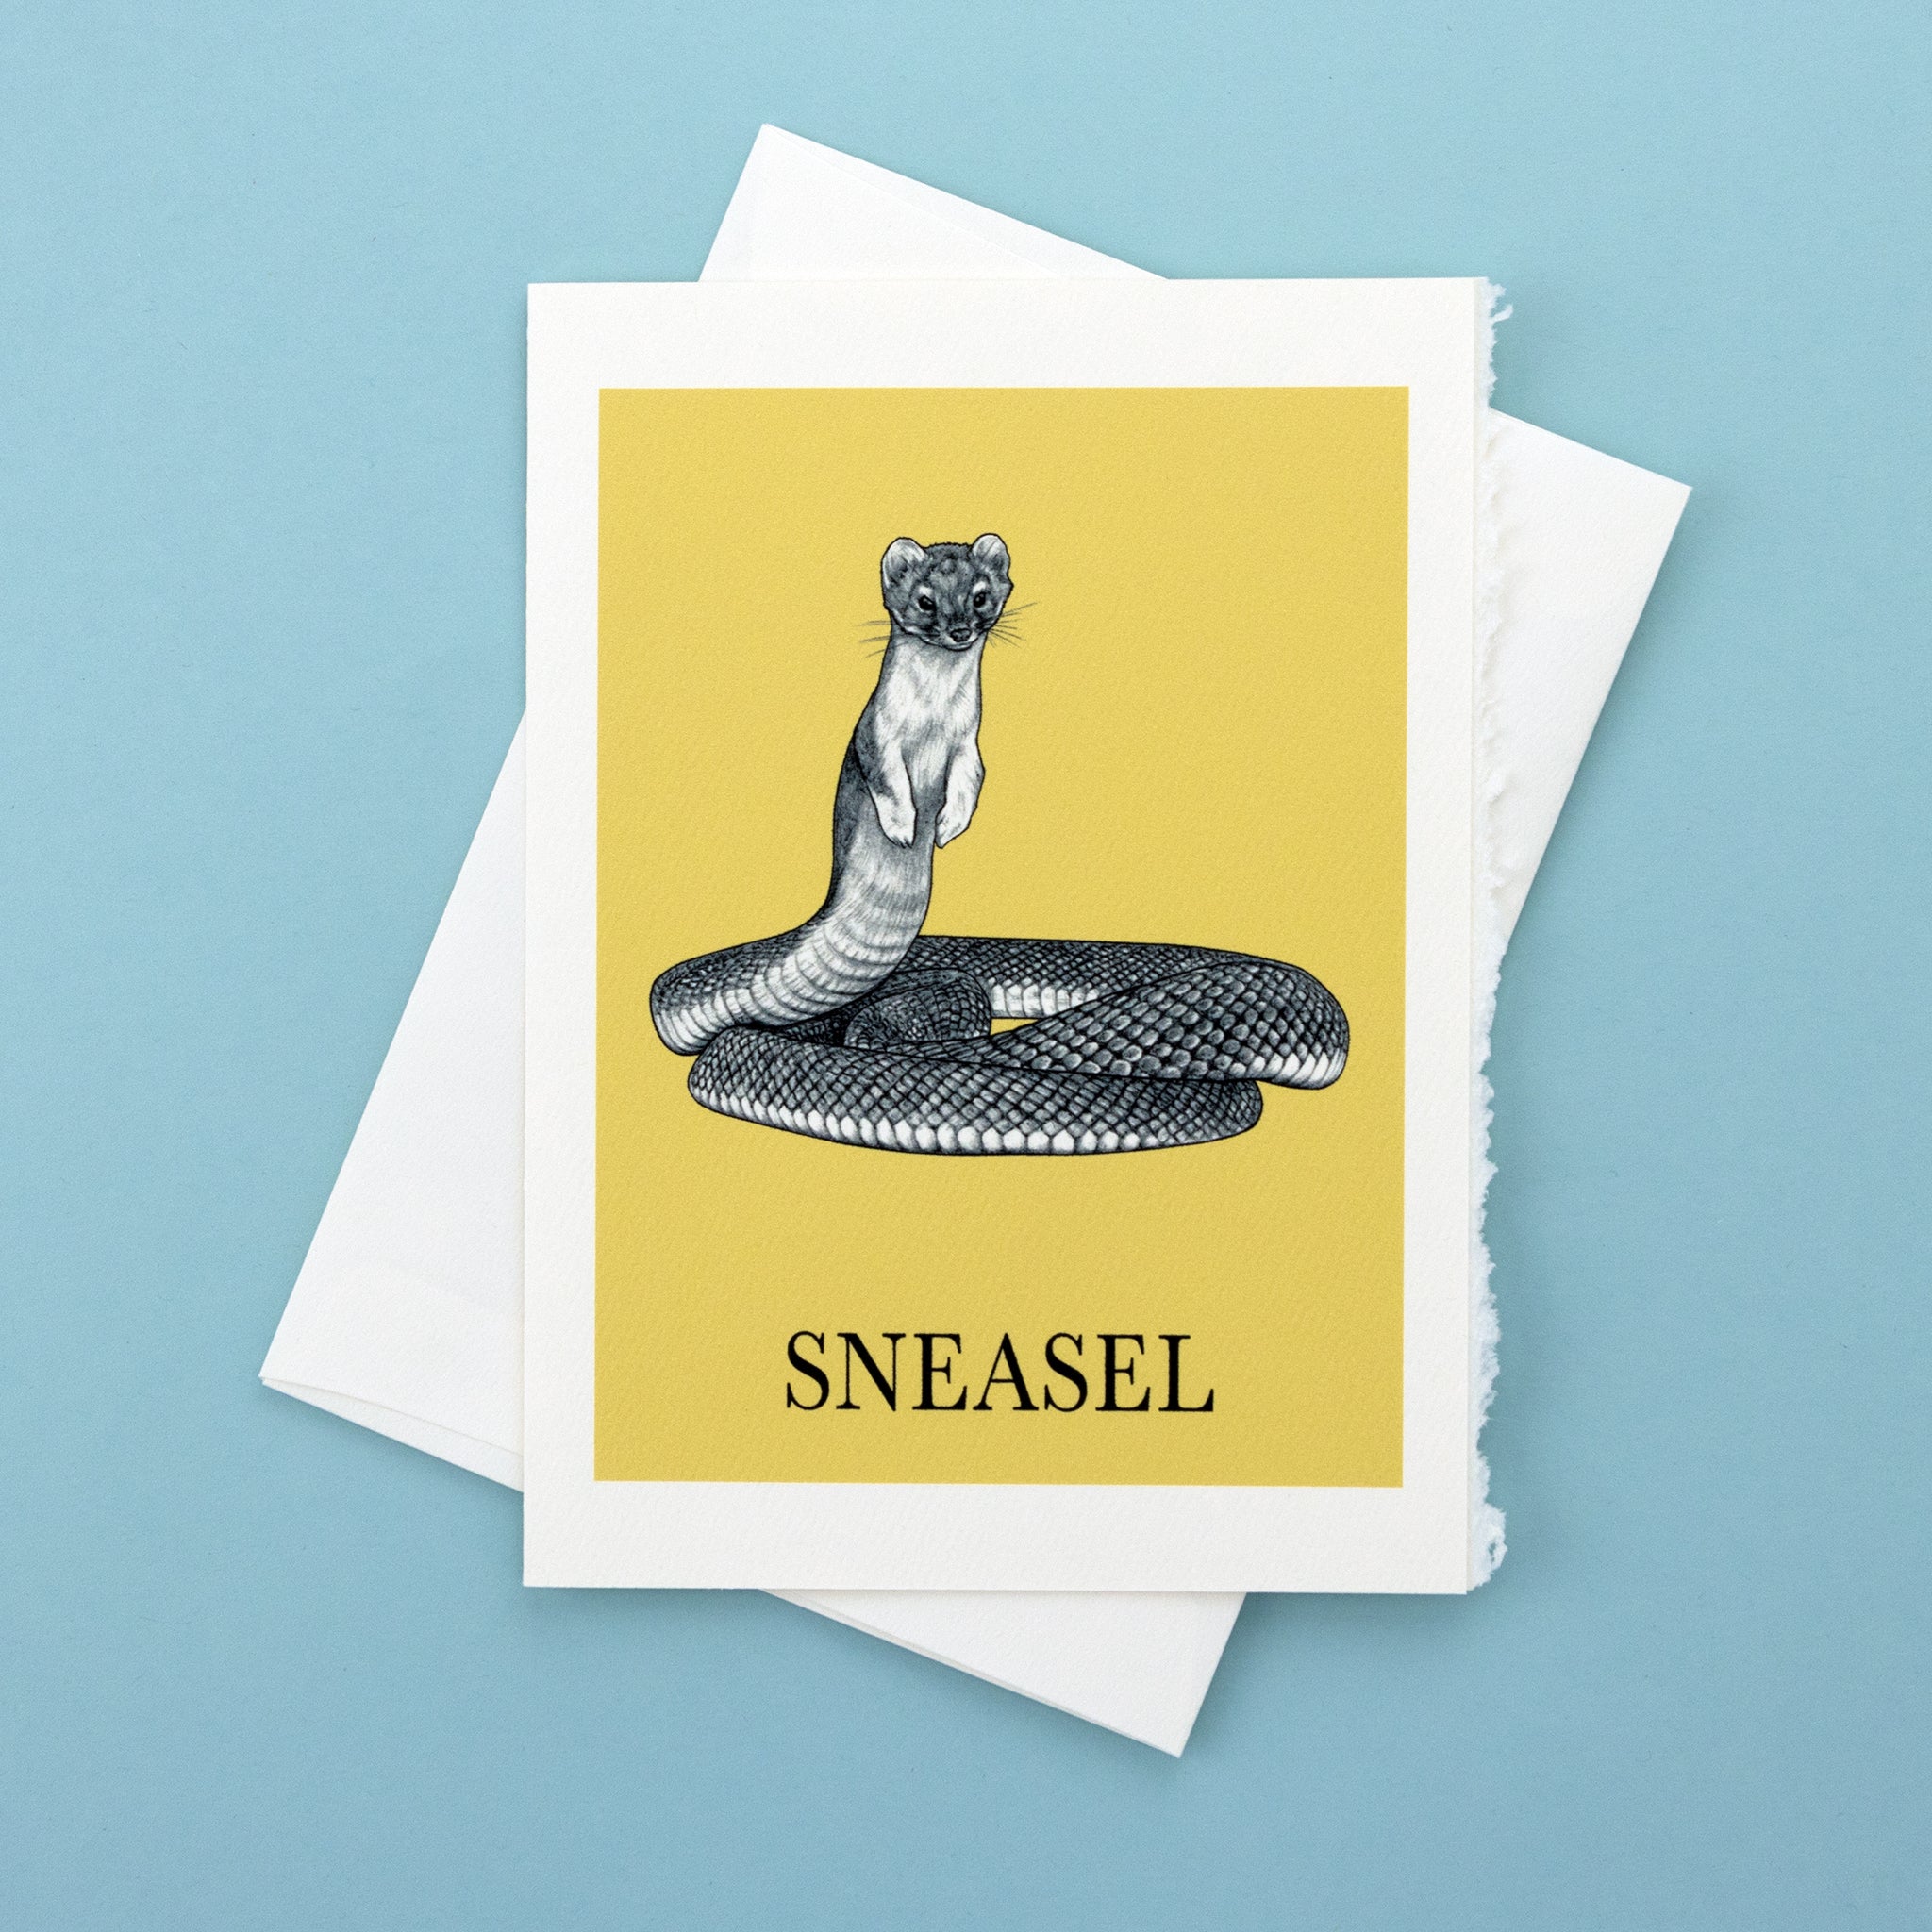 Sneasel | Snake + Weasel Hybrid Animal | 5x7" Greeting Card